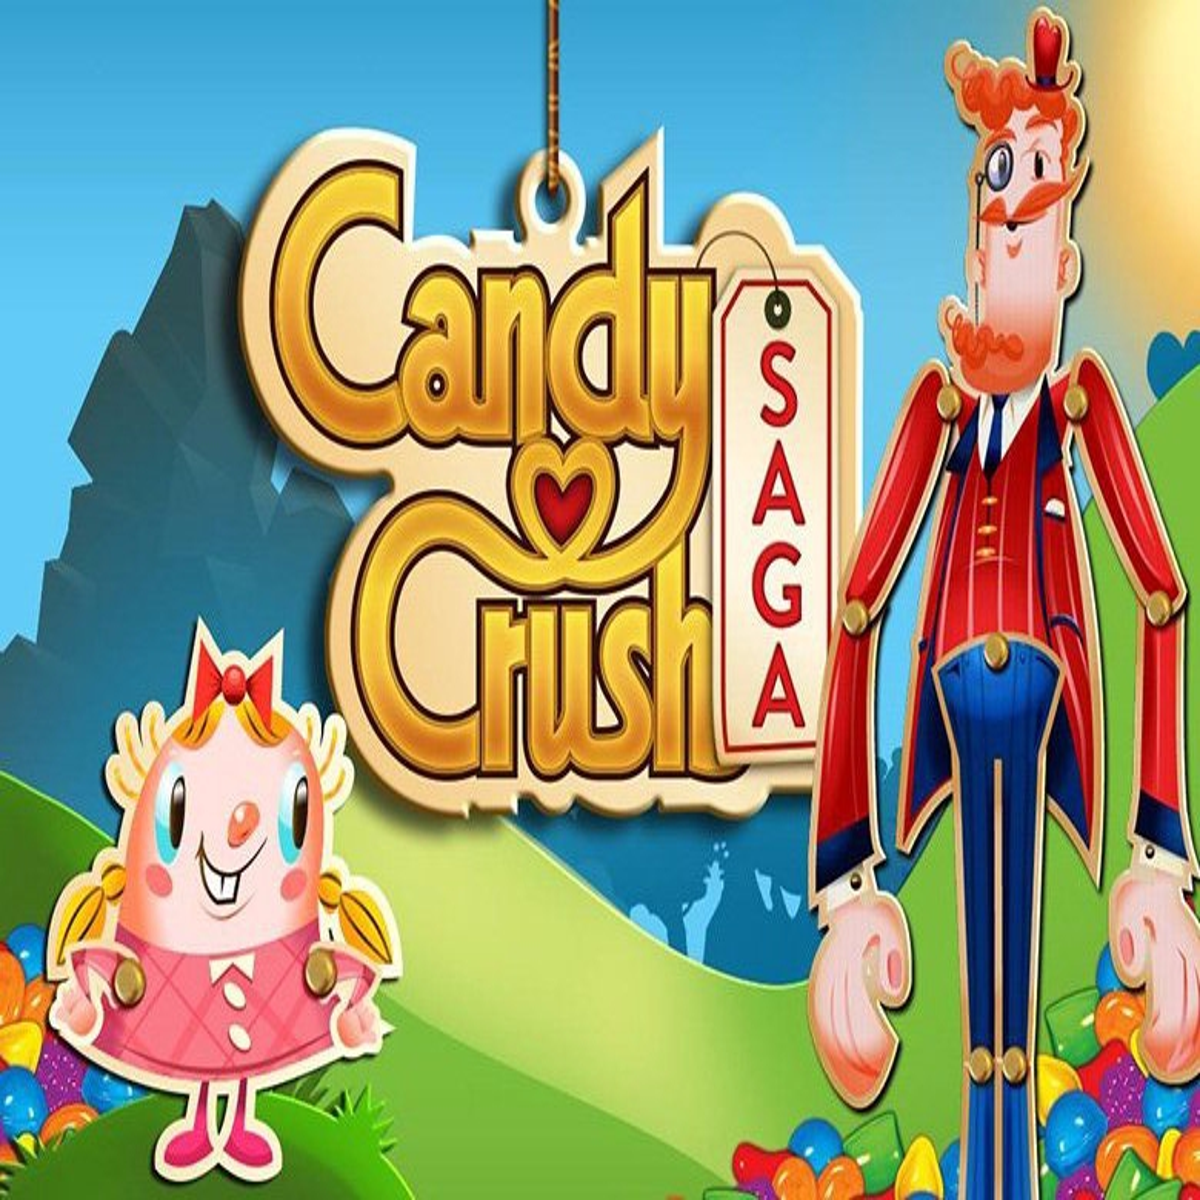 Download Candy Crush Saga 1.2281.2.0 AppxBundle File for Windows